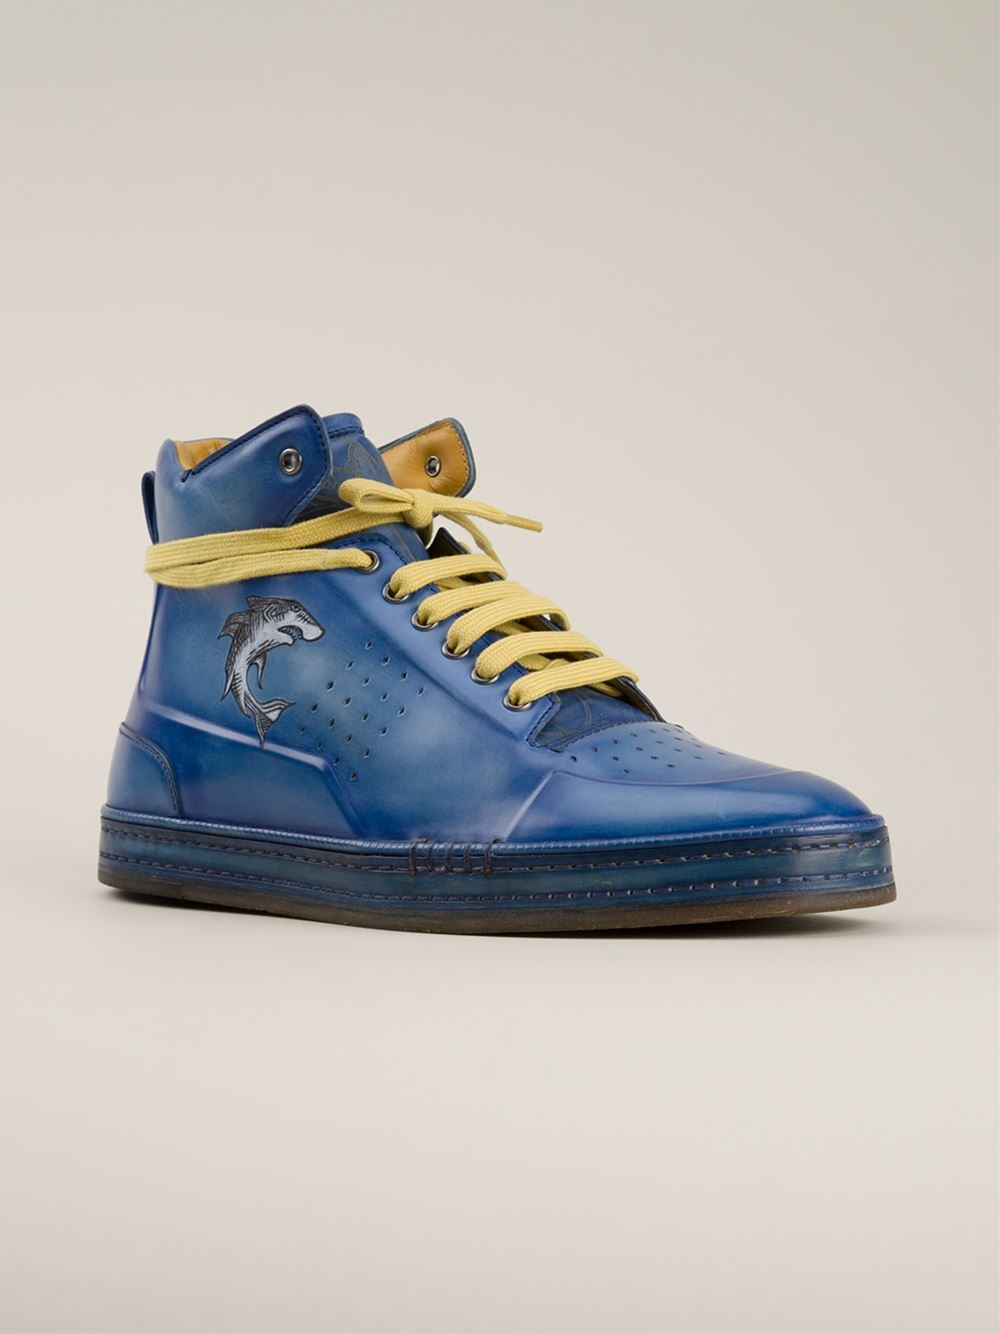 Lyst - Berluti Playtime High-Top Sneakers in Blue for Men